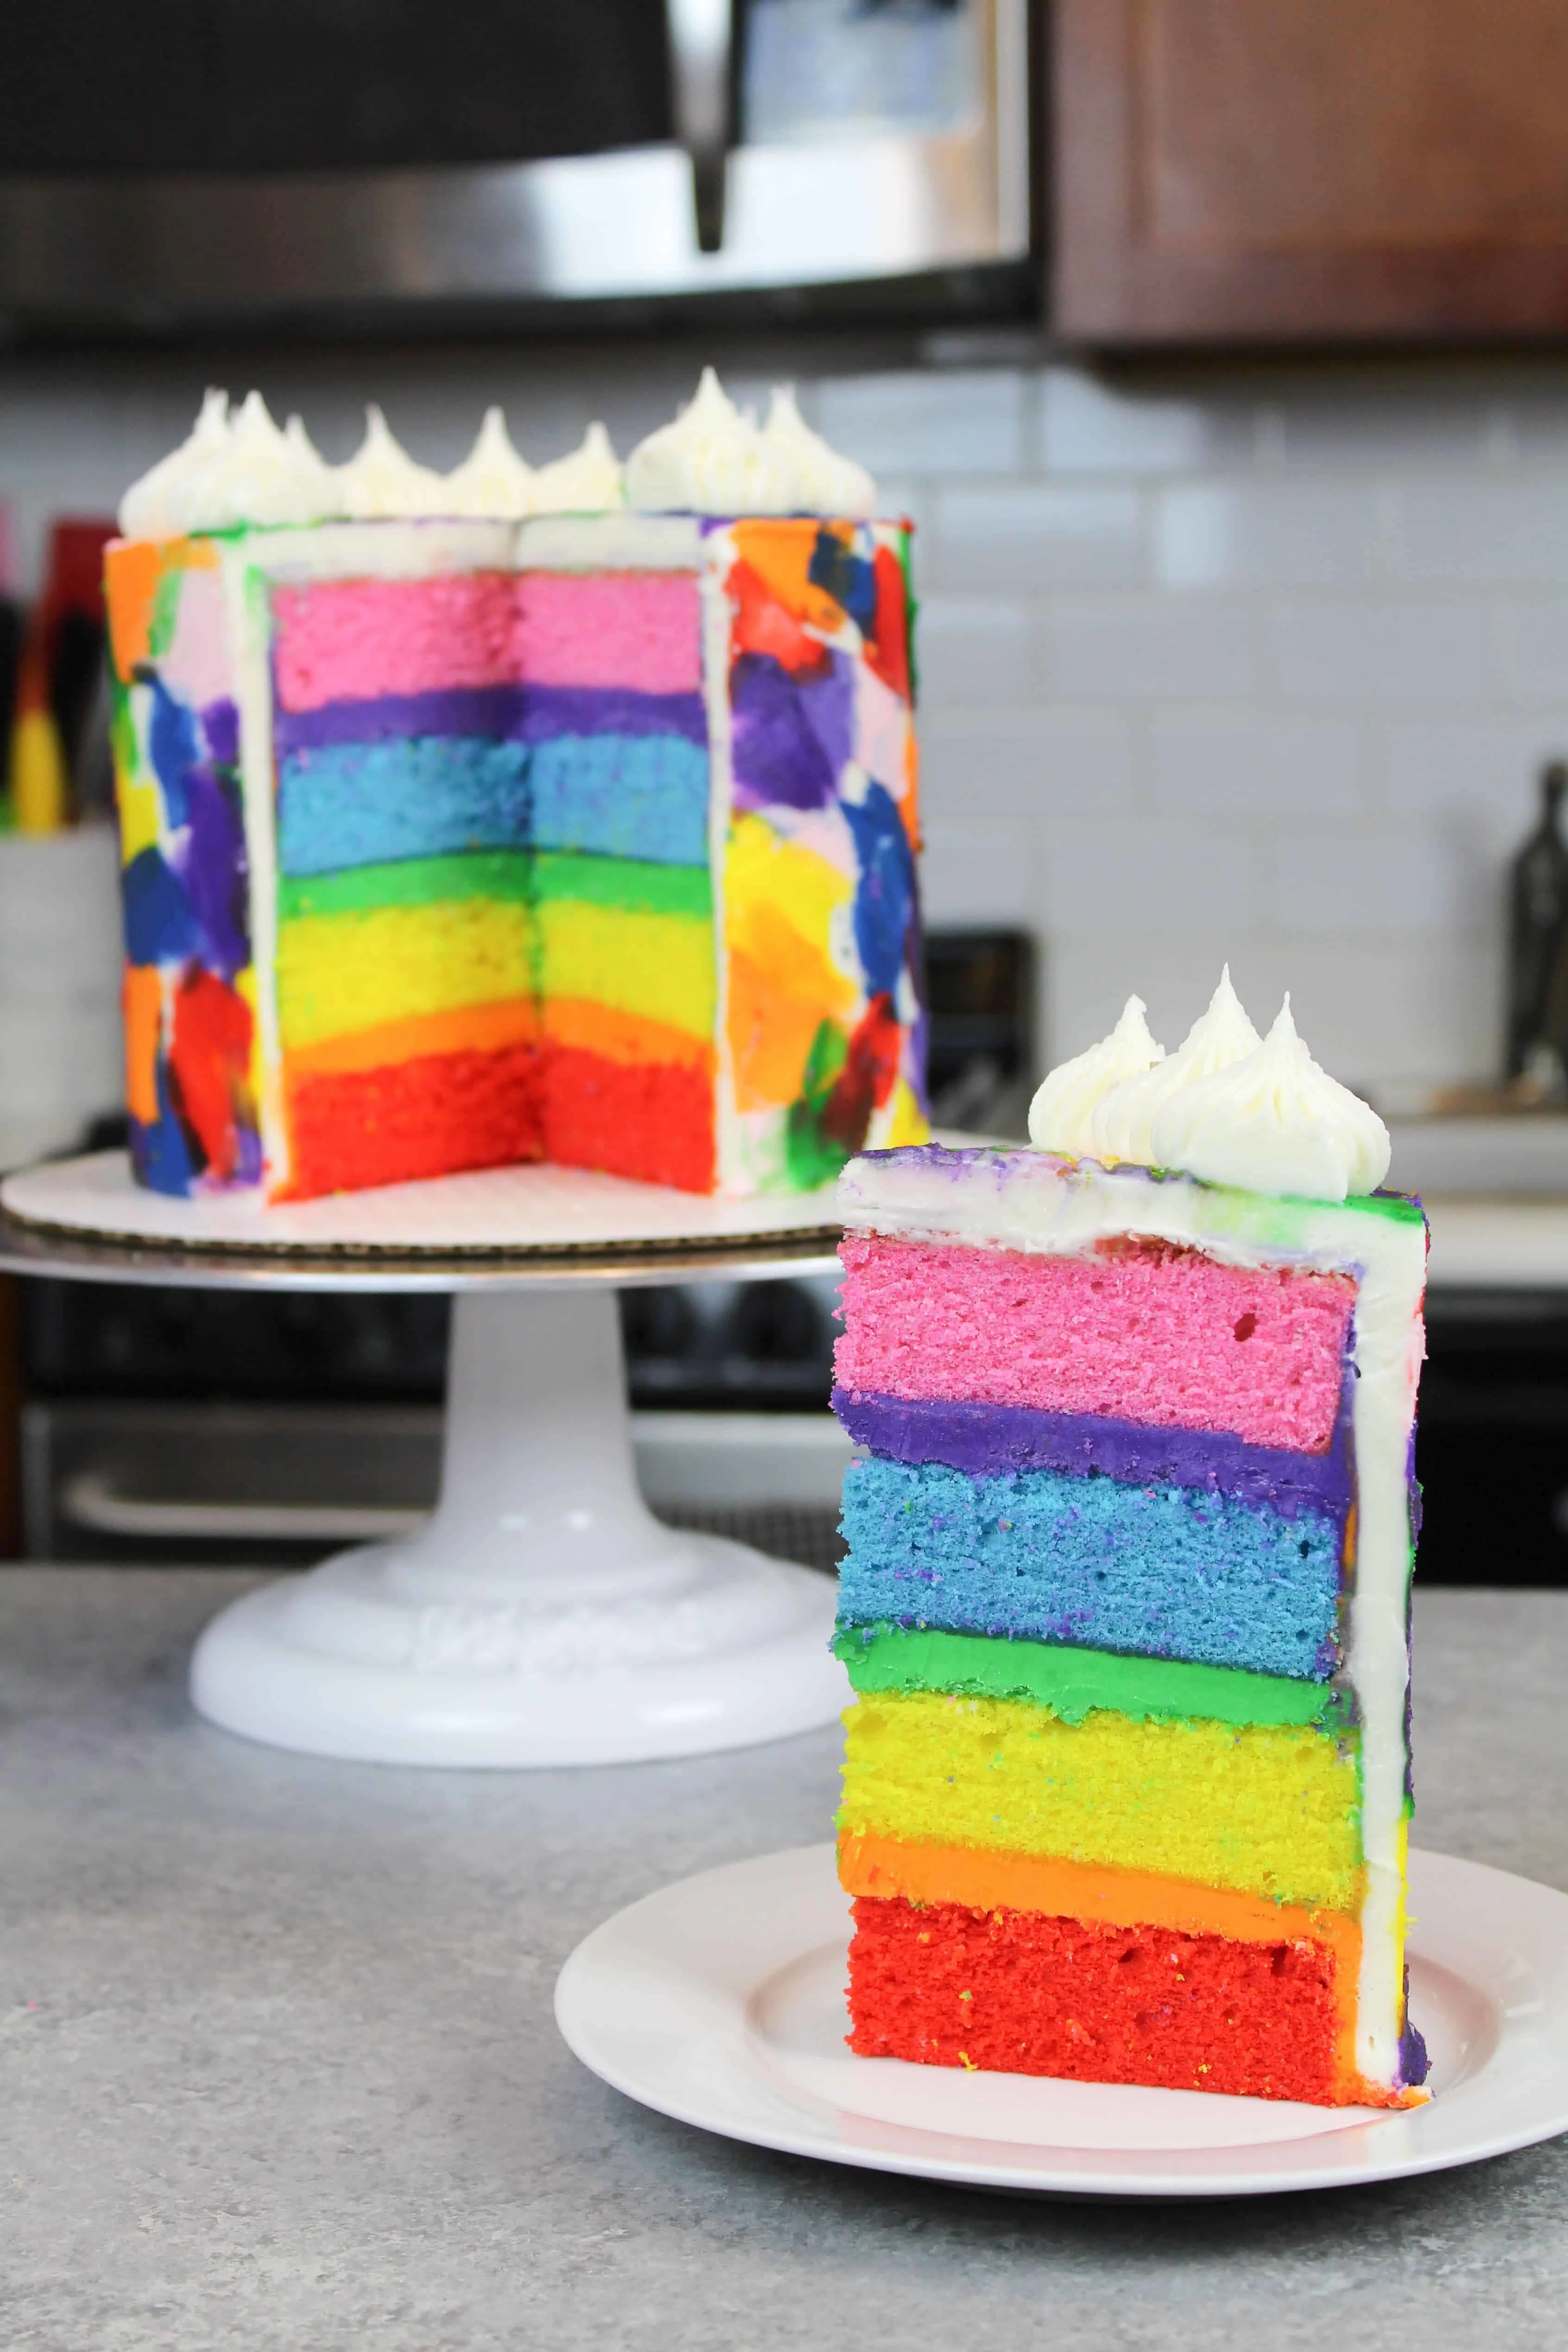 Rainbow layer cake recipe made with 4 cake layers